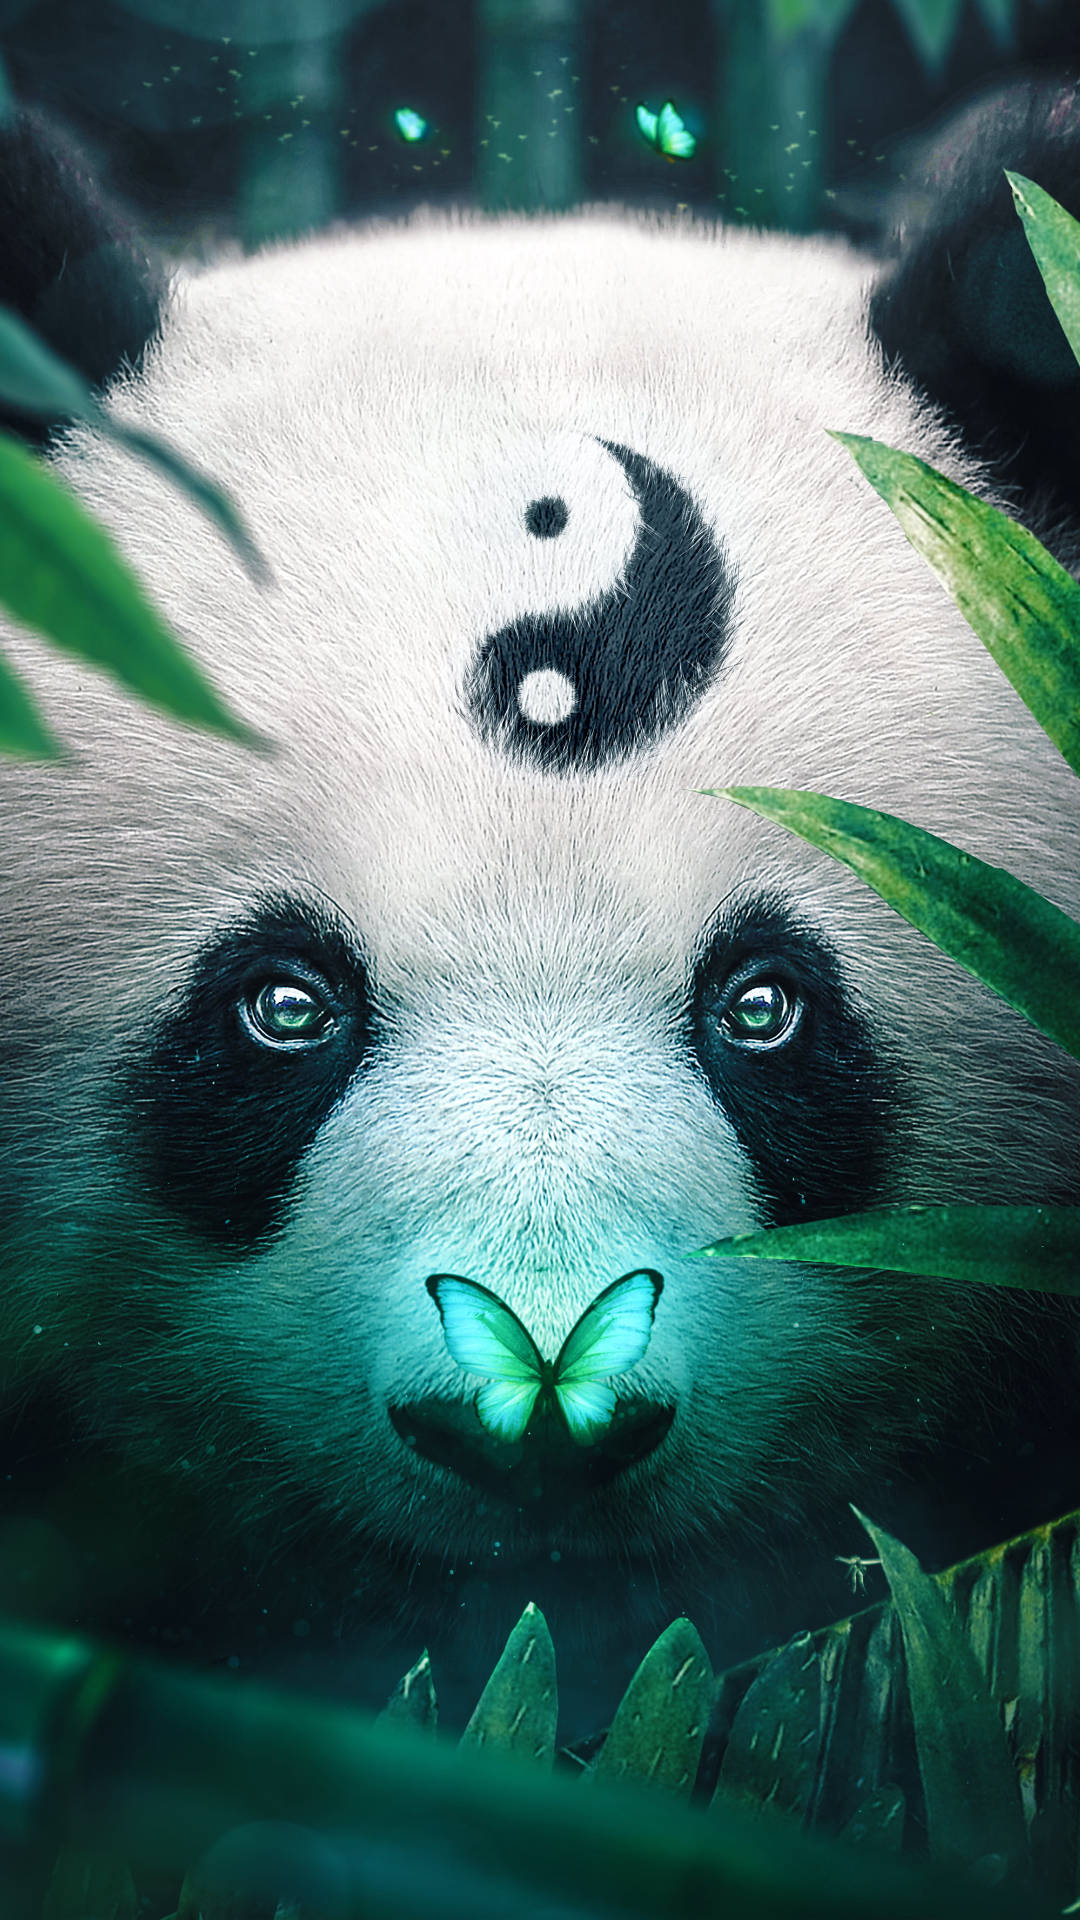 Panda Jungle Iphone Background